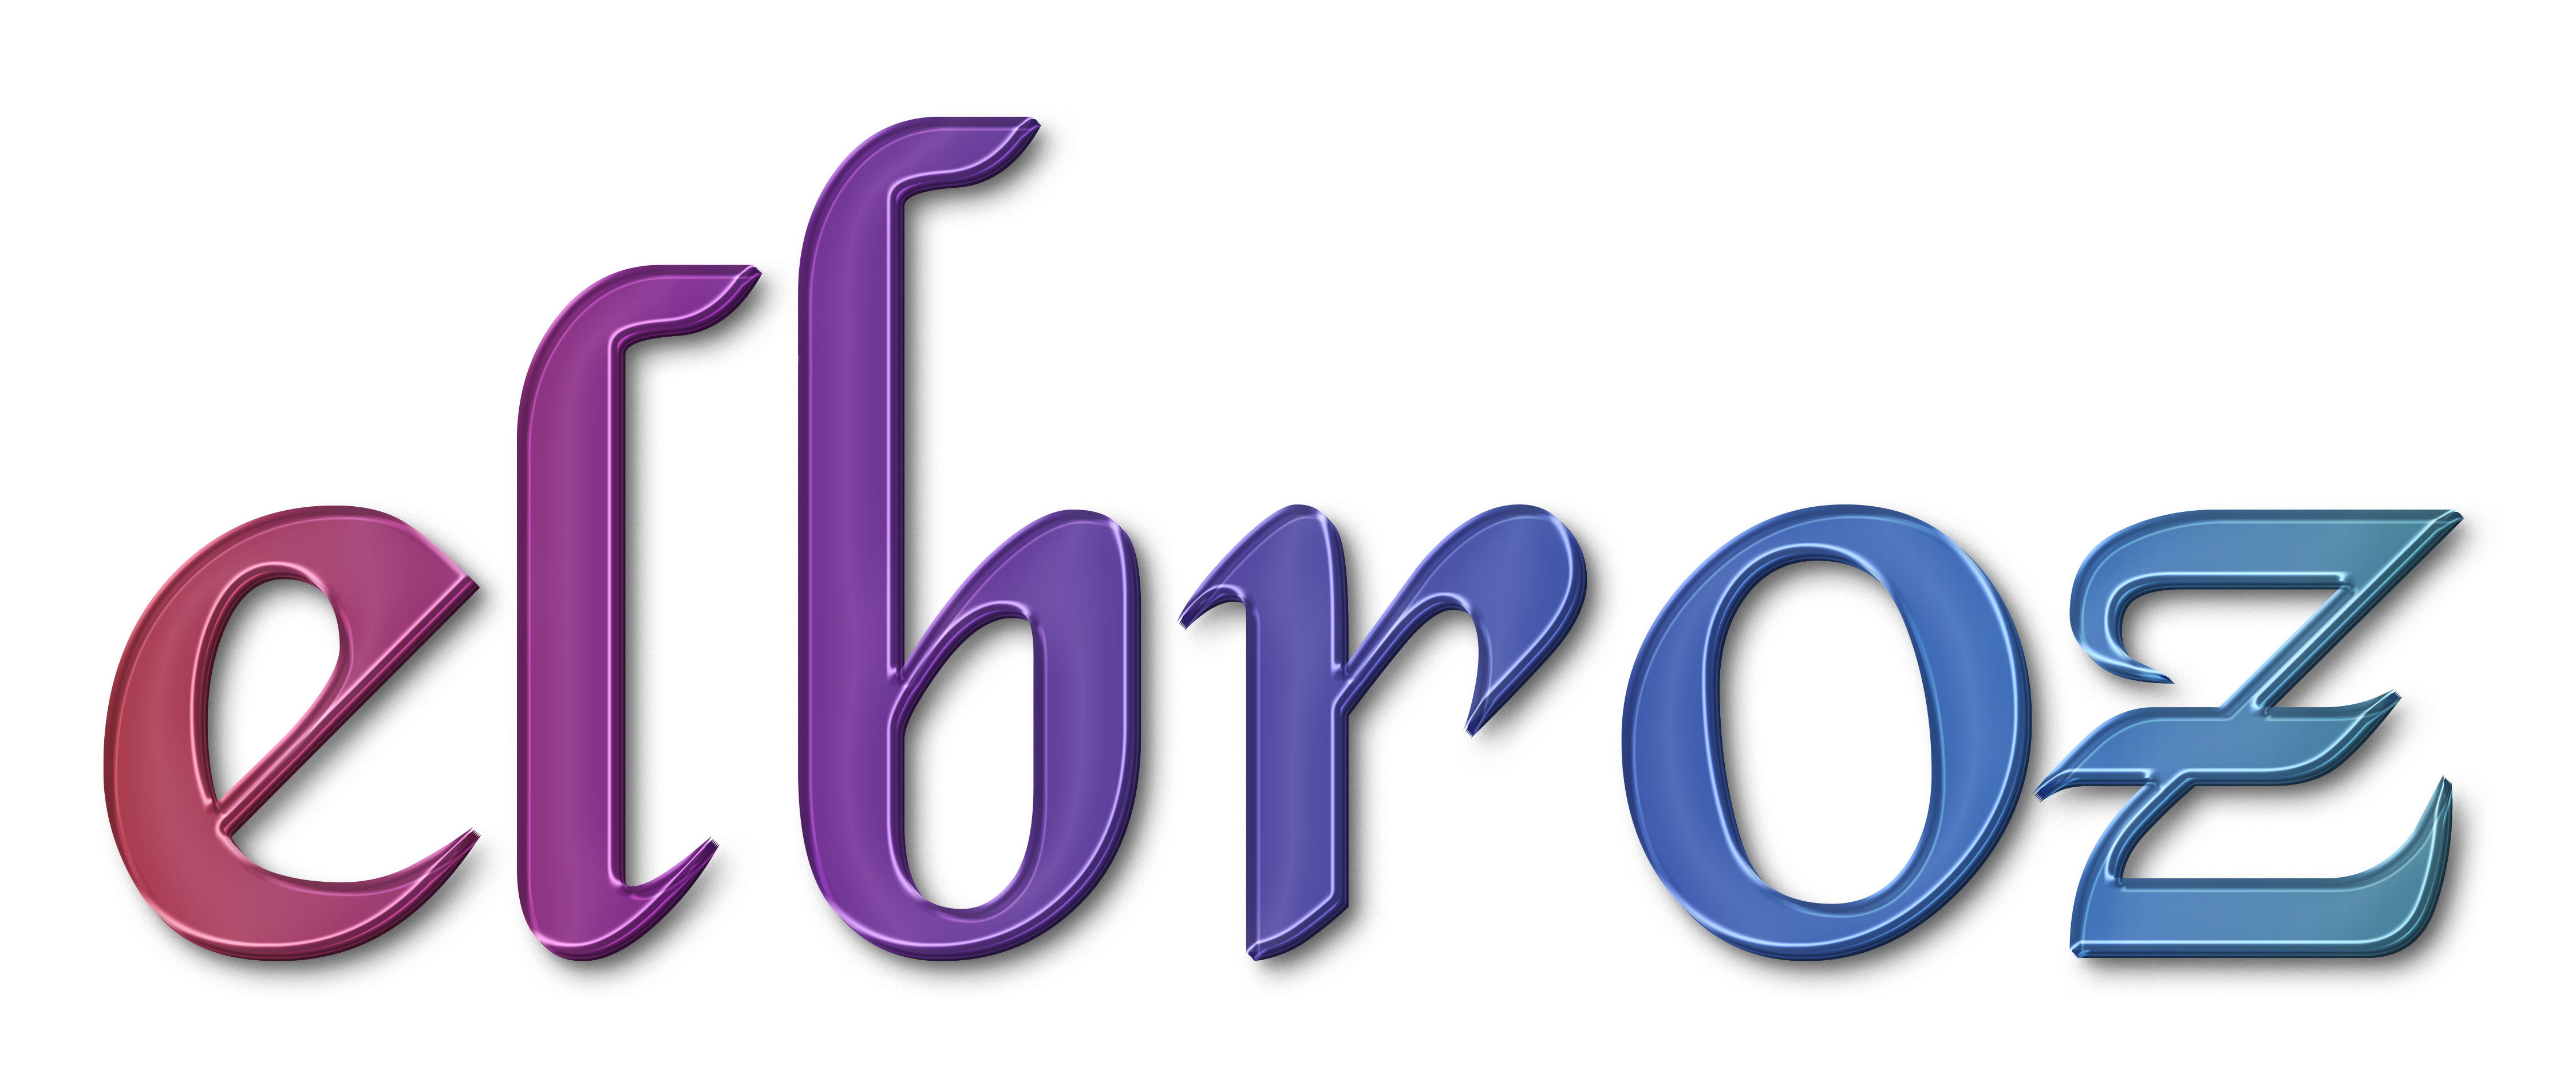 elbroz media logo